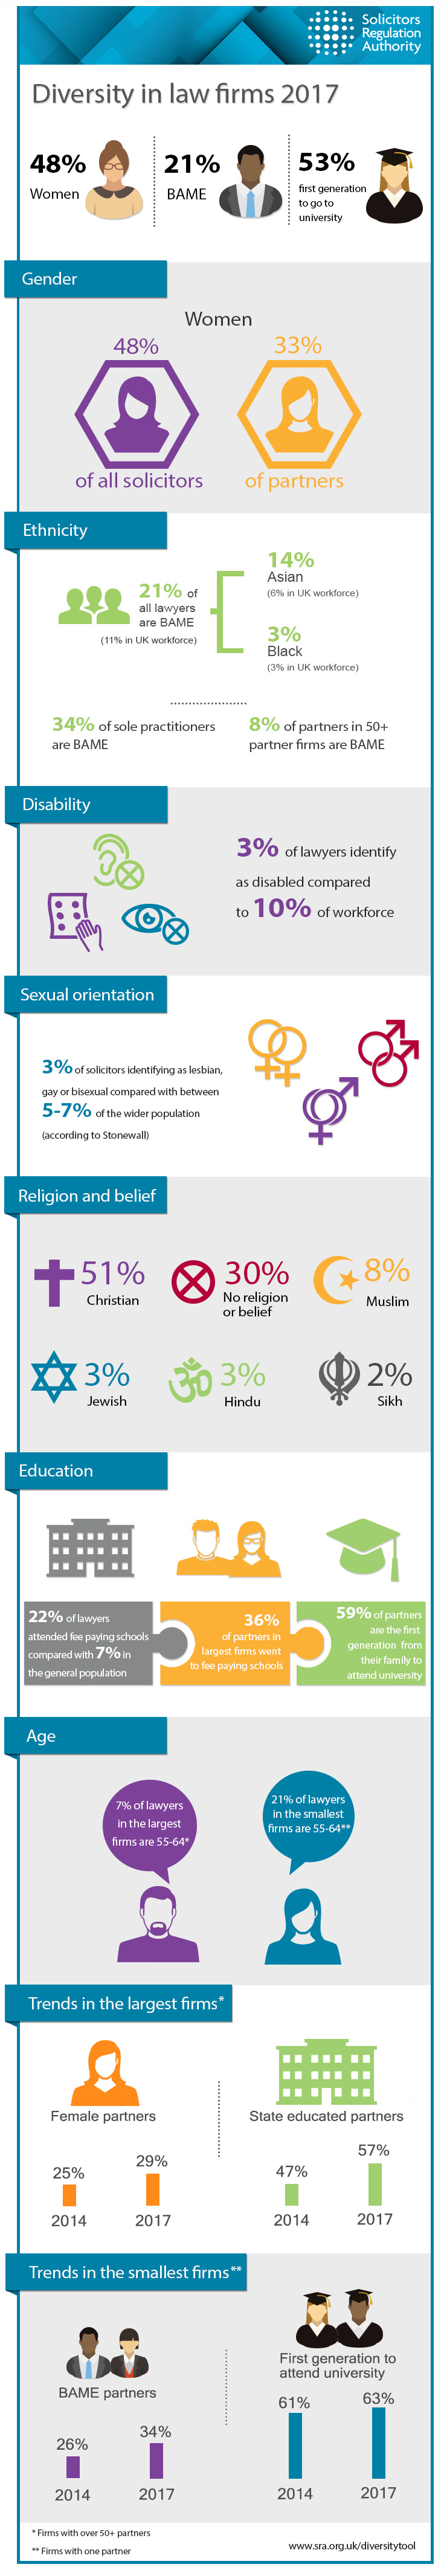 Diversity data infographic